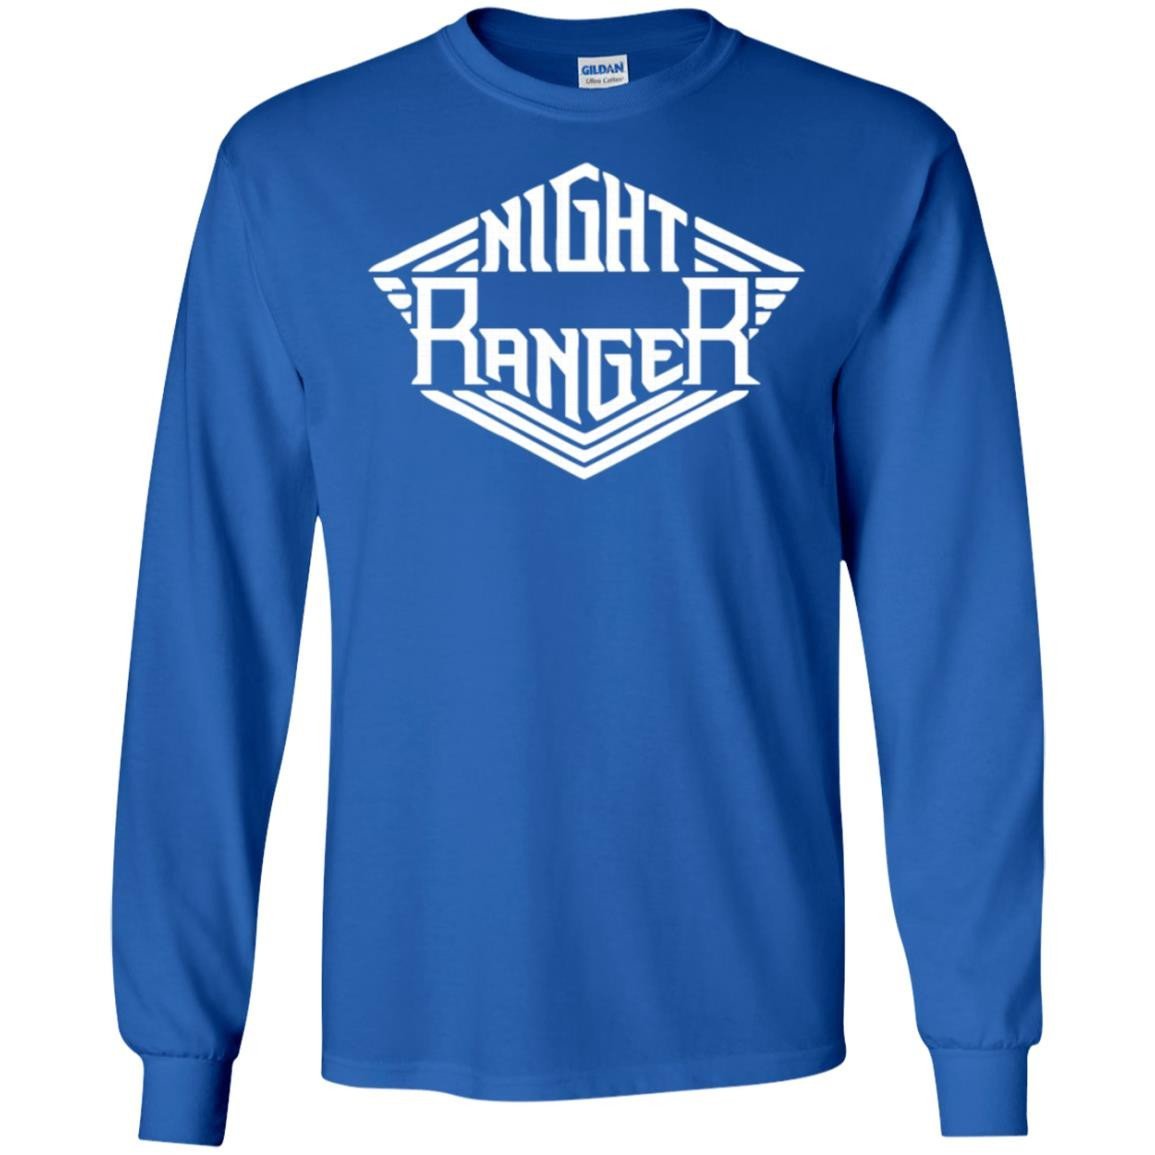 night ranger t shirt